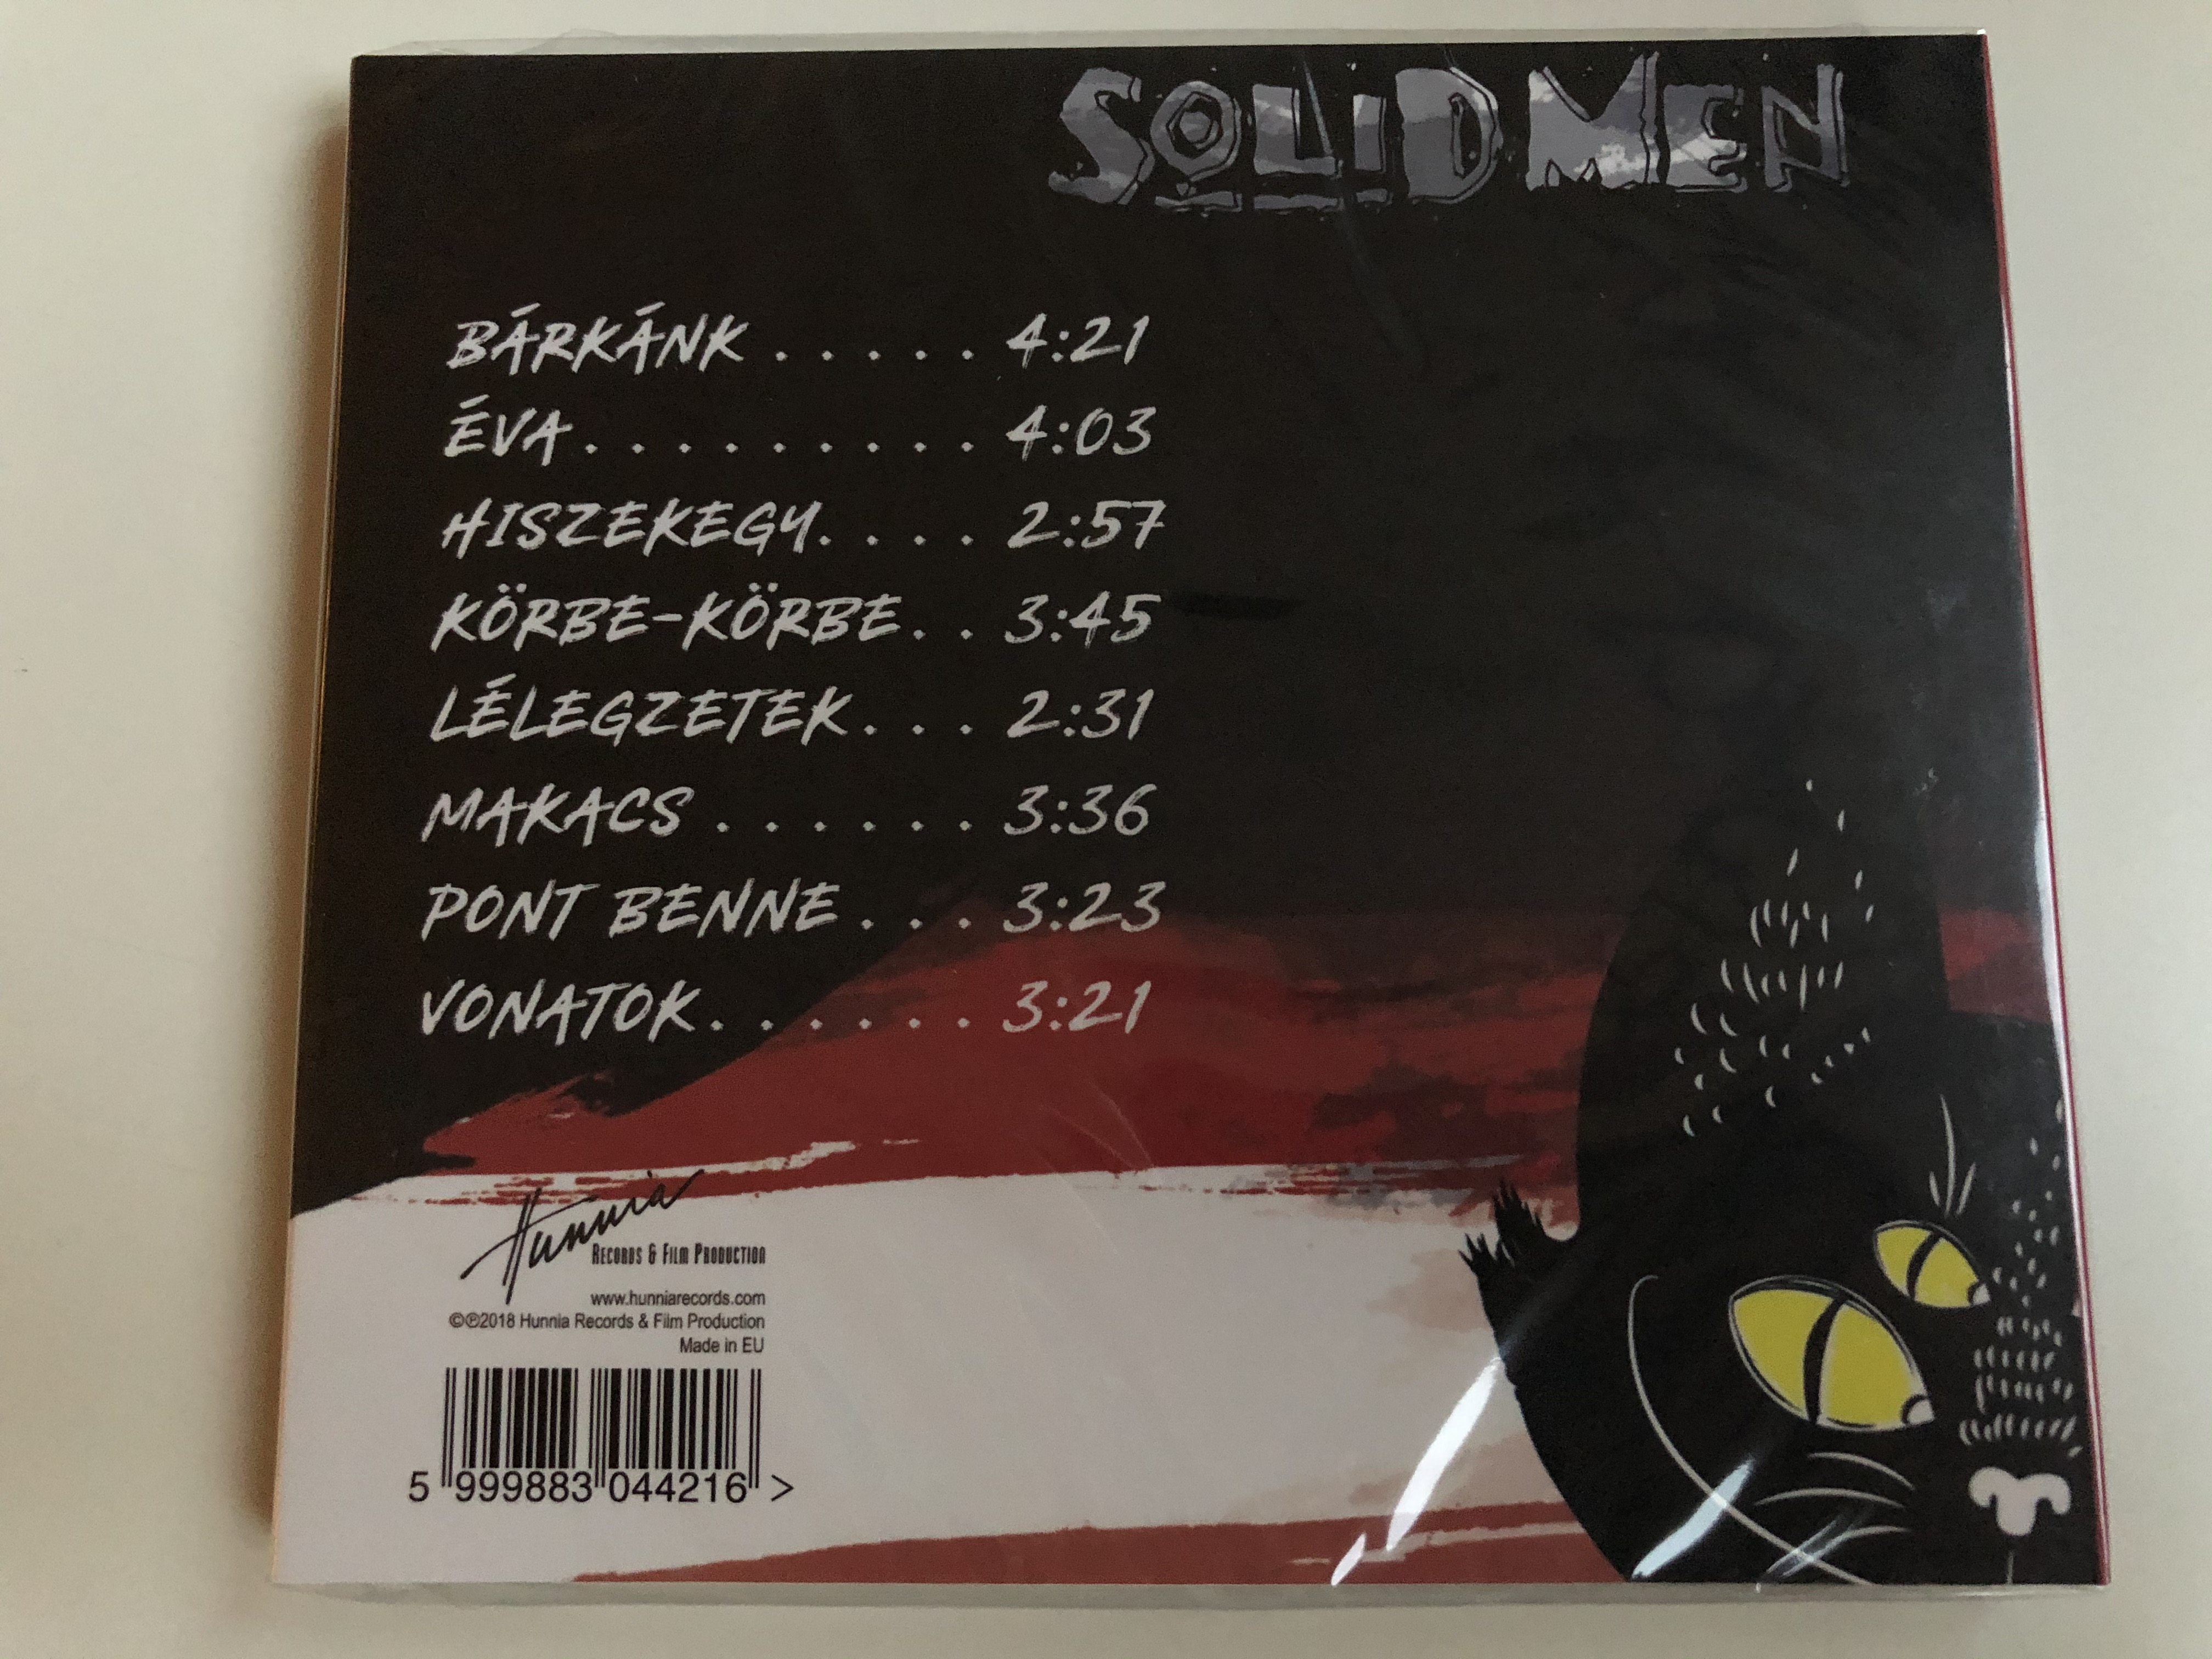 solidmen-tancorak-idosebbeknek-hunnia-records-film-production-audio-cd-2018-hrcd1017-2-.jpg